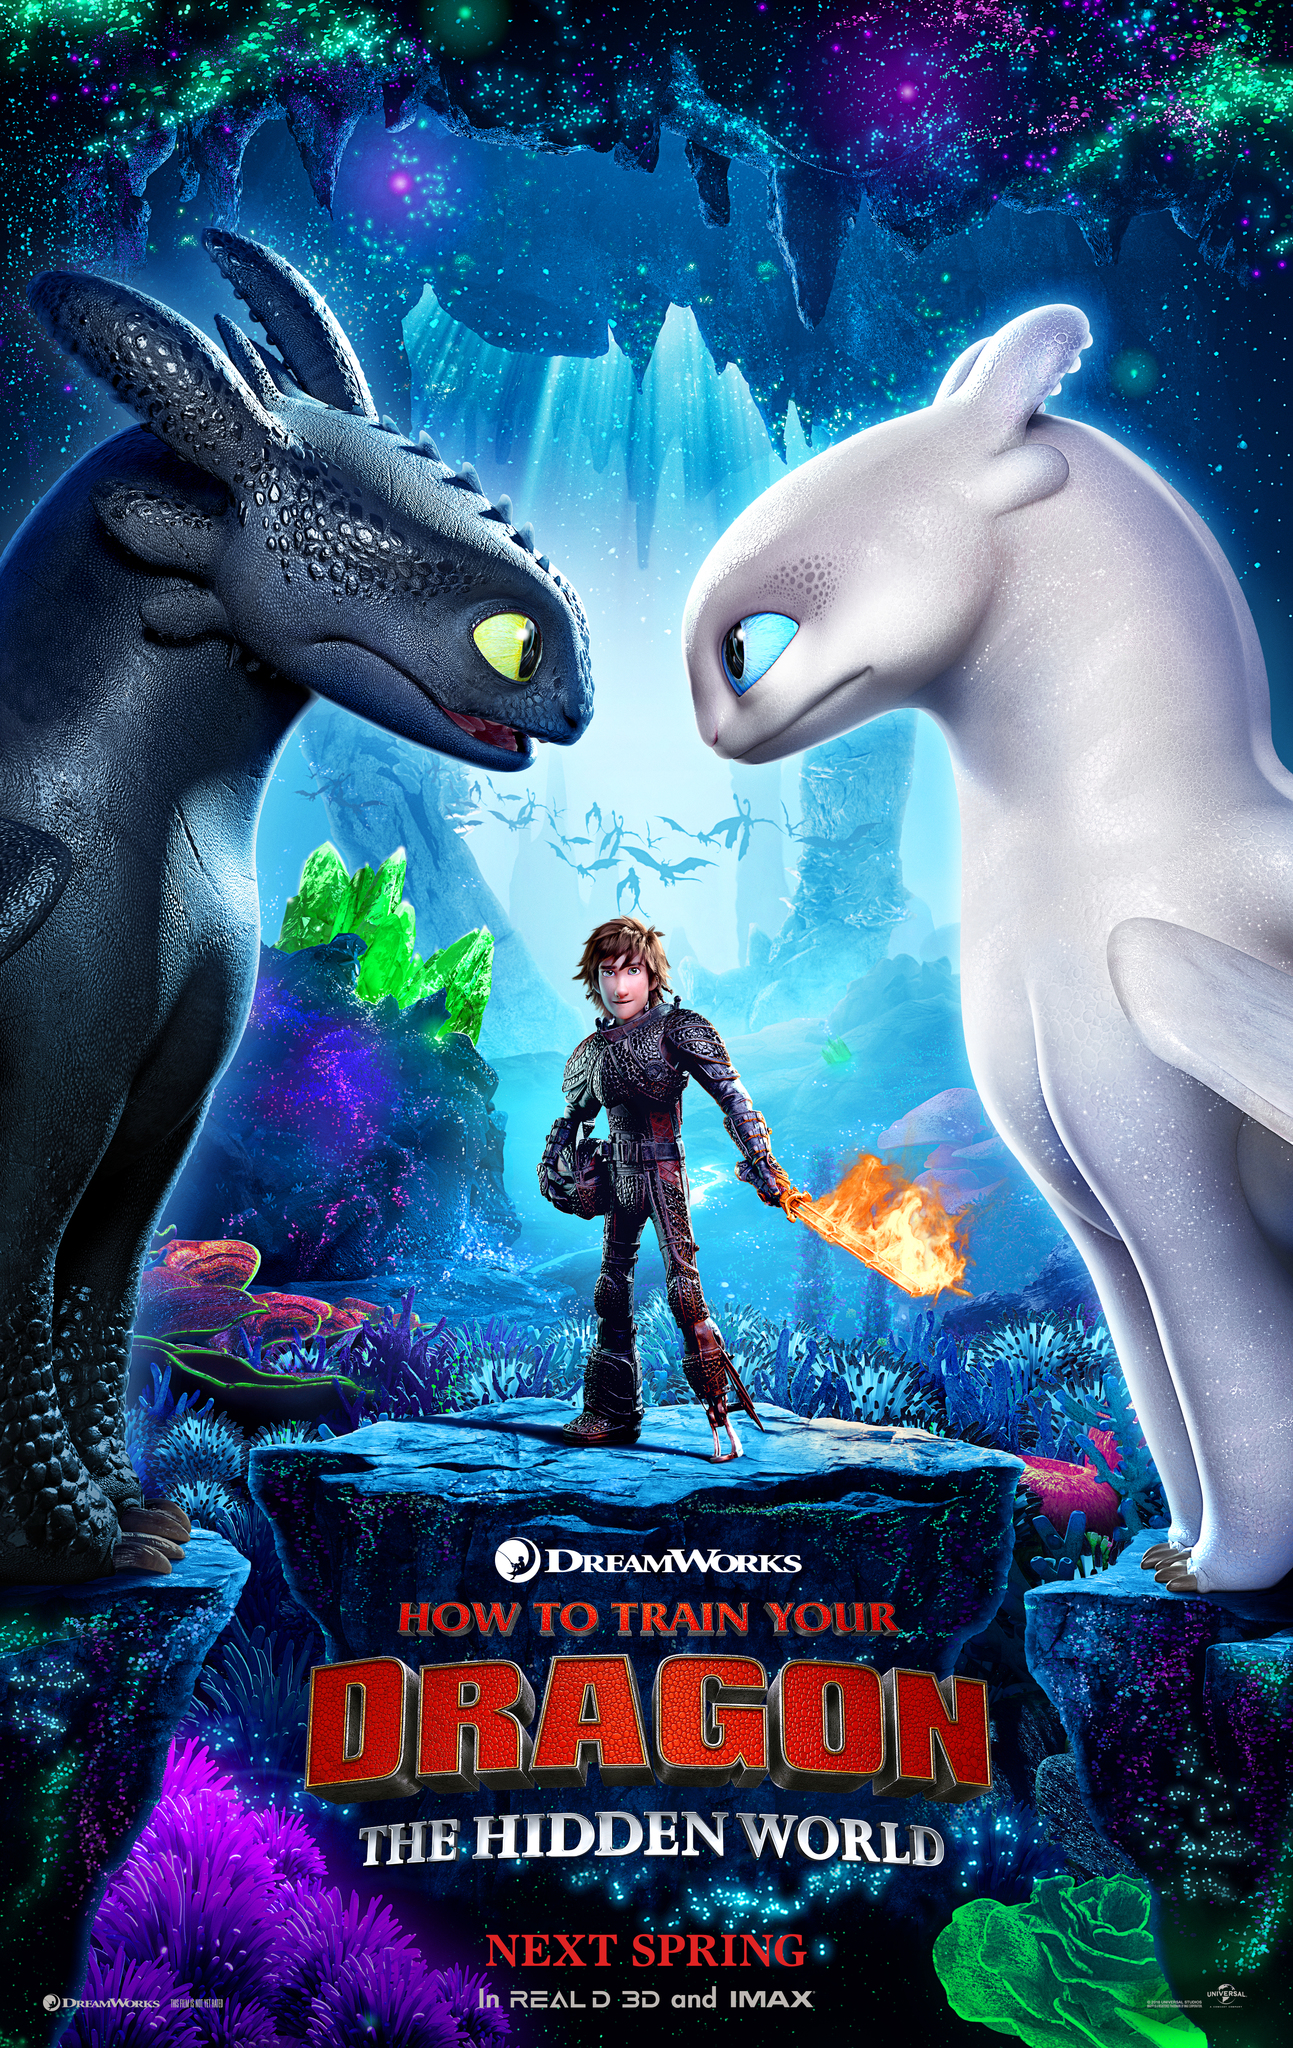 Stiahni si Filmy Kreslené Jak vycvicit draka 3 / How to Train Your Dragon: The Hidden World (2019)(CZ) = CSFD 78%